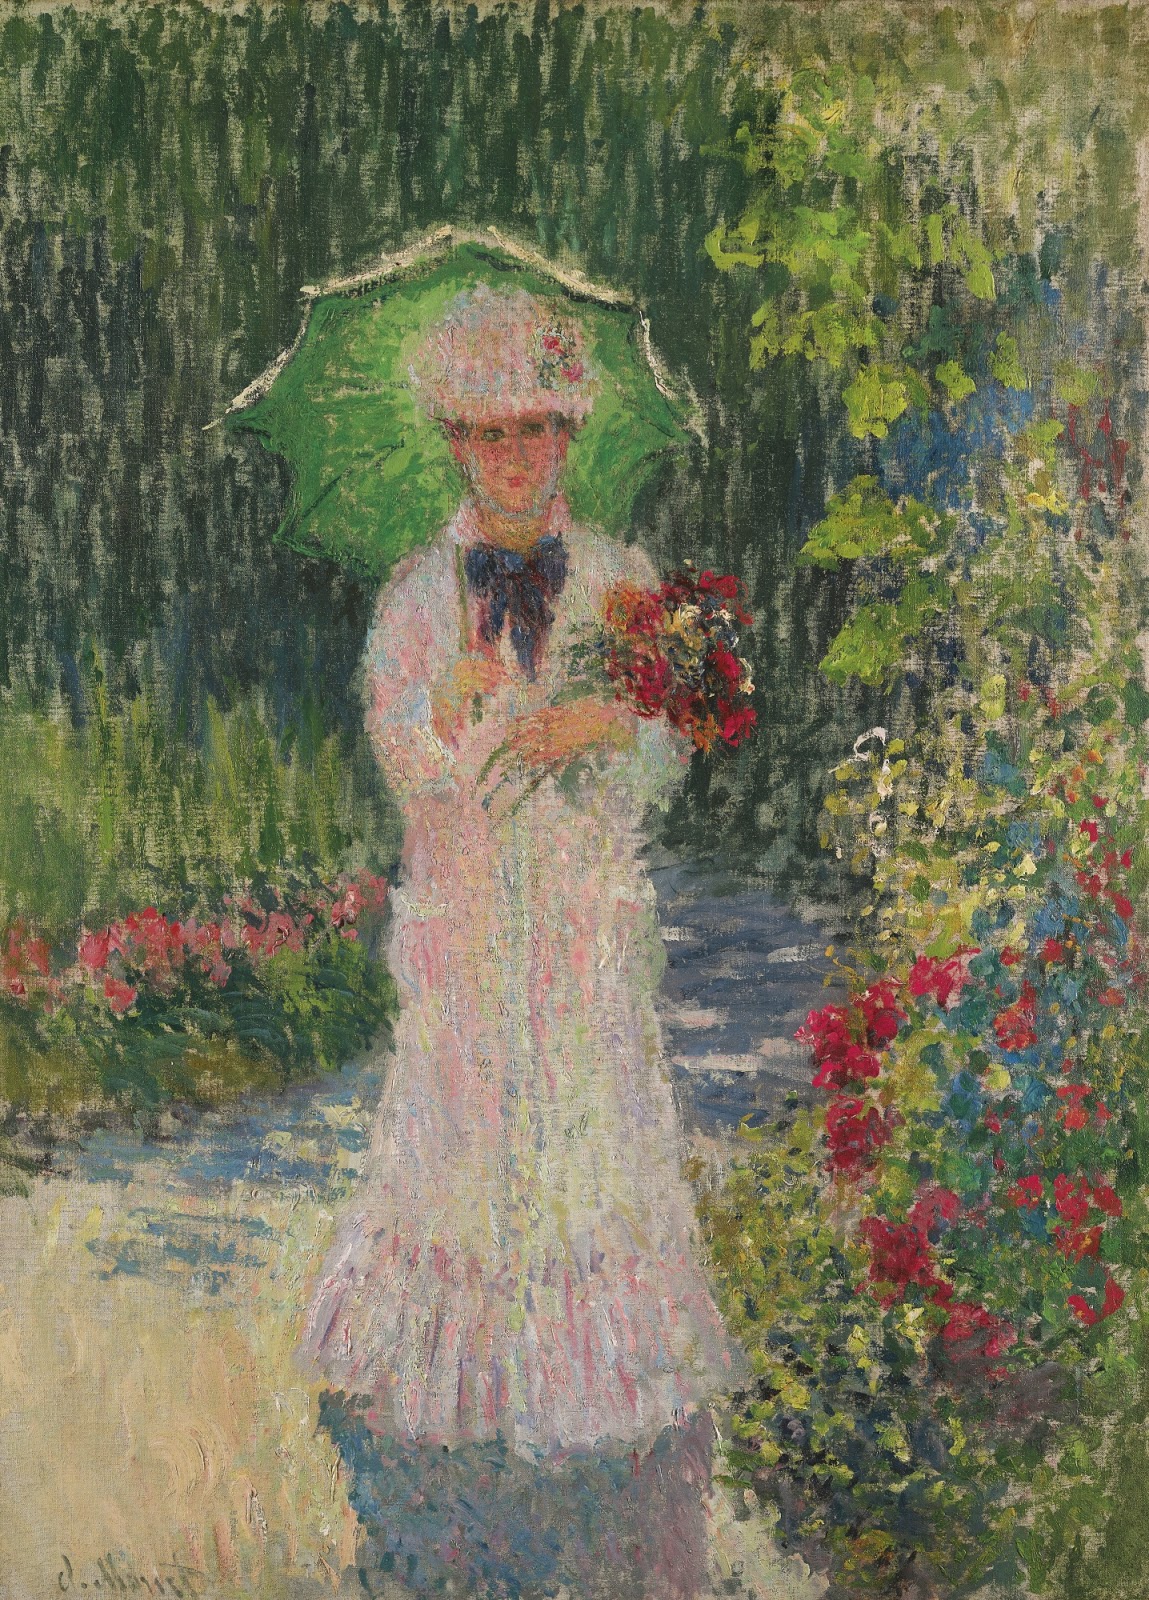 Claude+Monet-1840-1926 (182).jpg